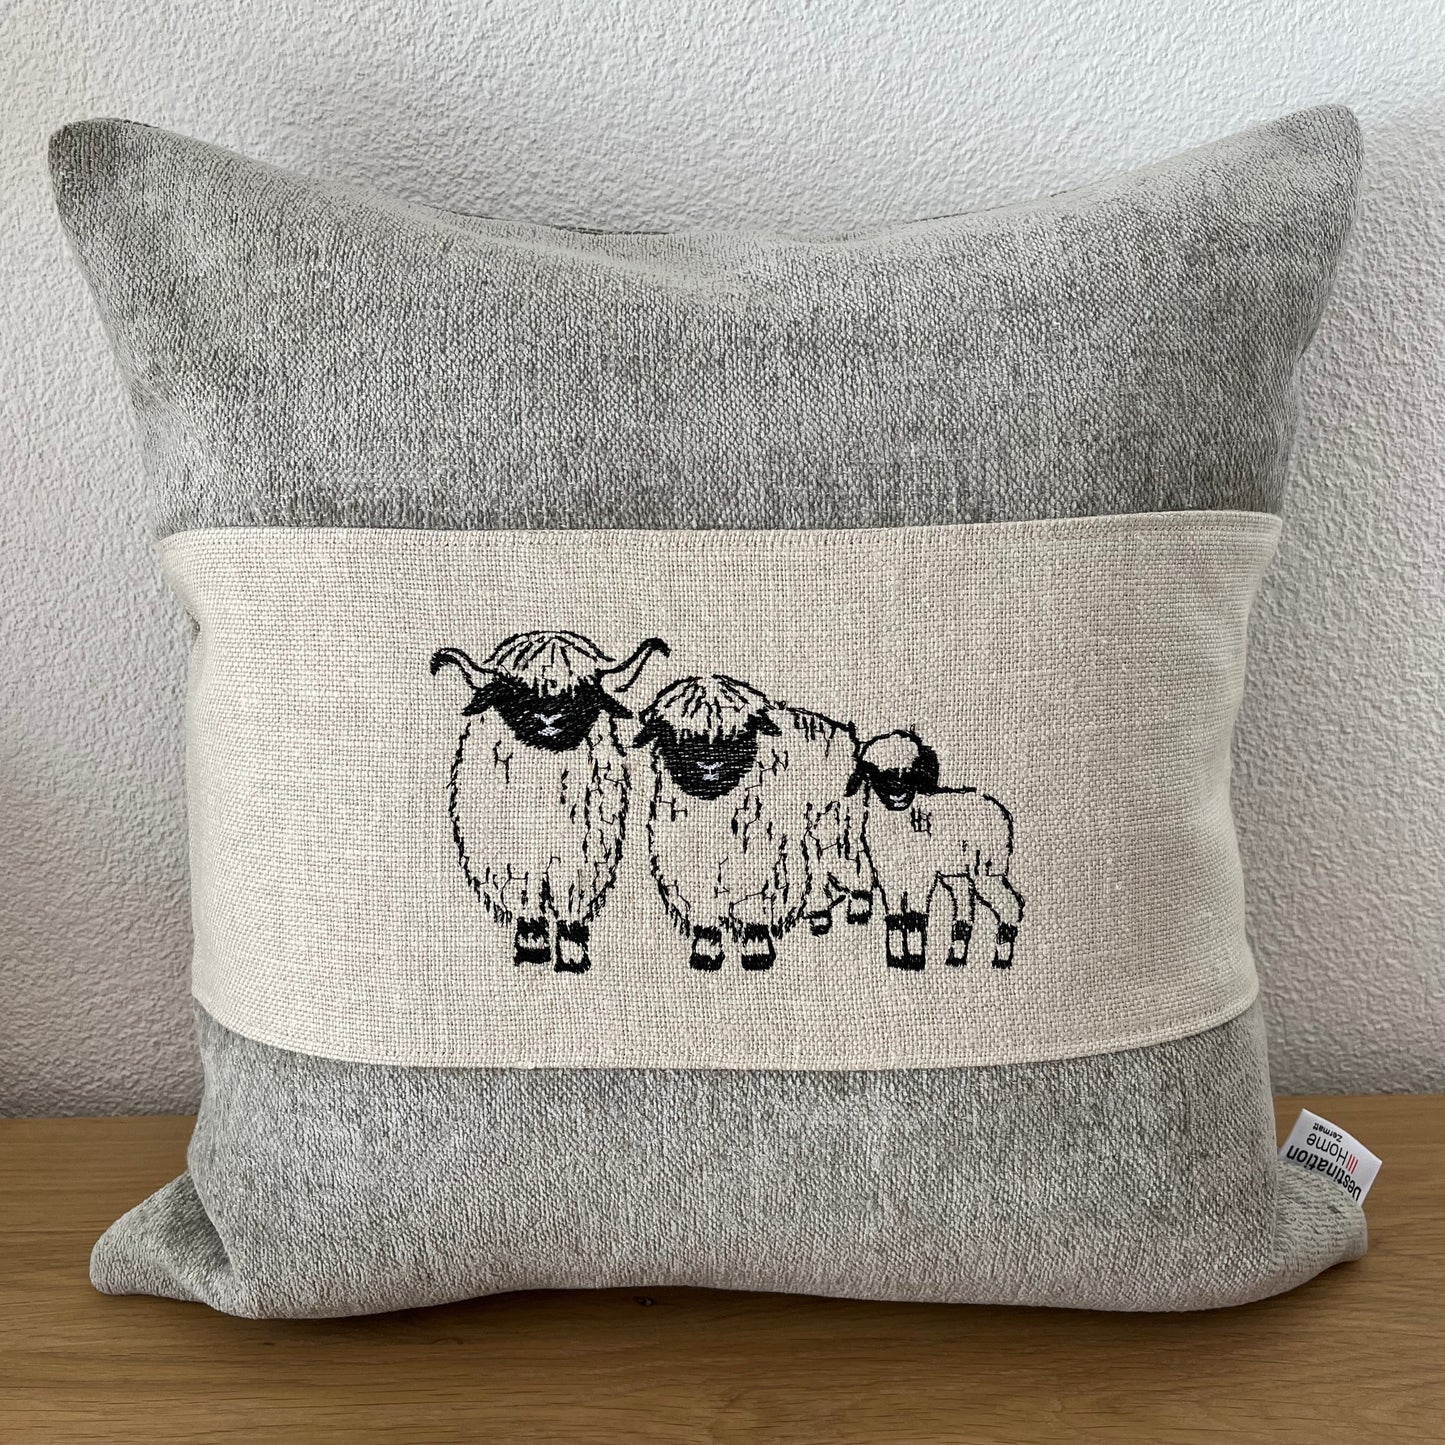 Blacknose Sheep cushion cover, three sheep, beige